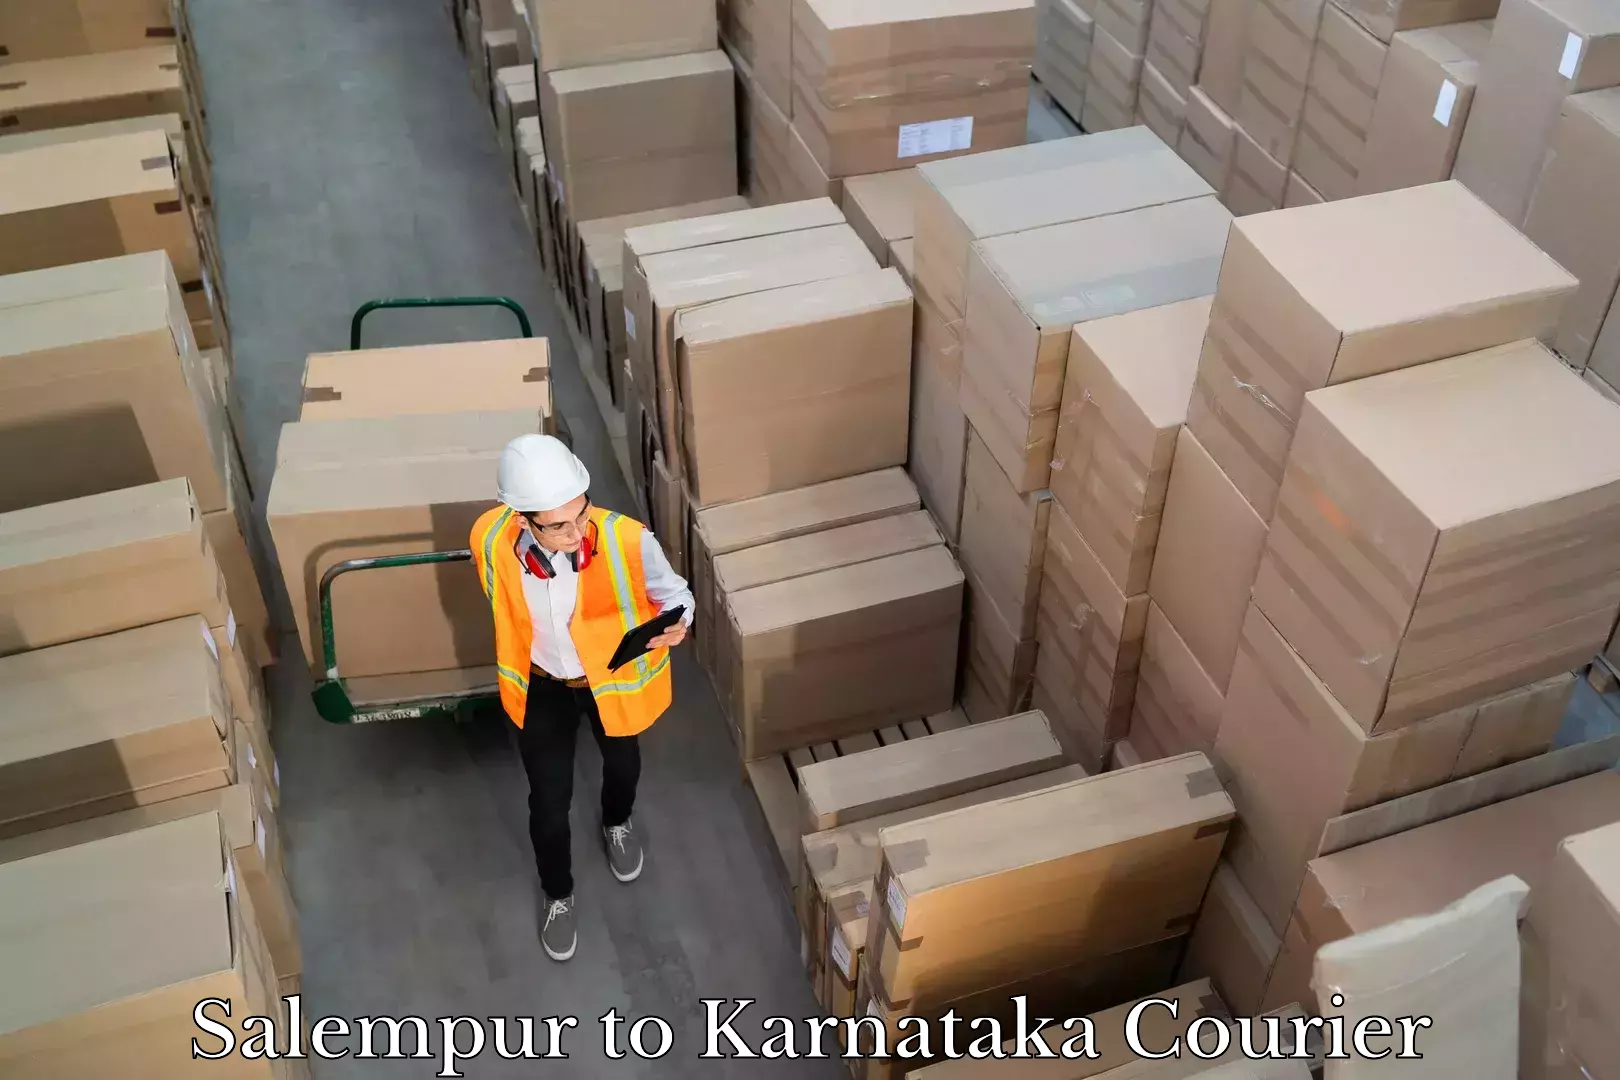 Digital courier platforms Salempur to Karnataka